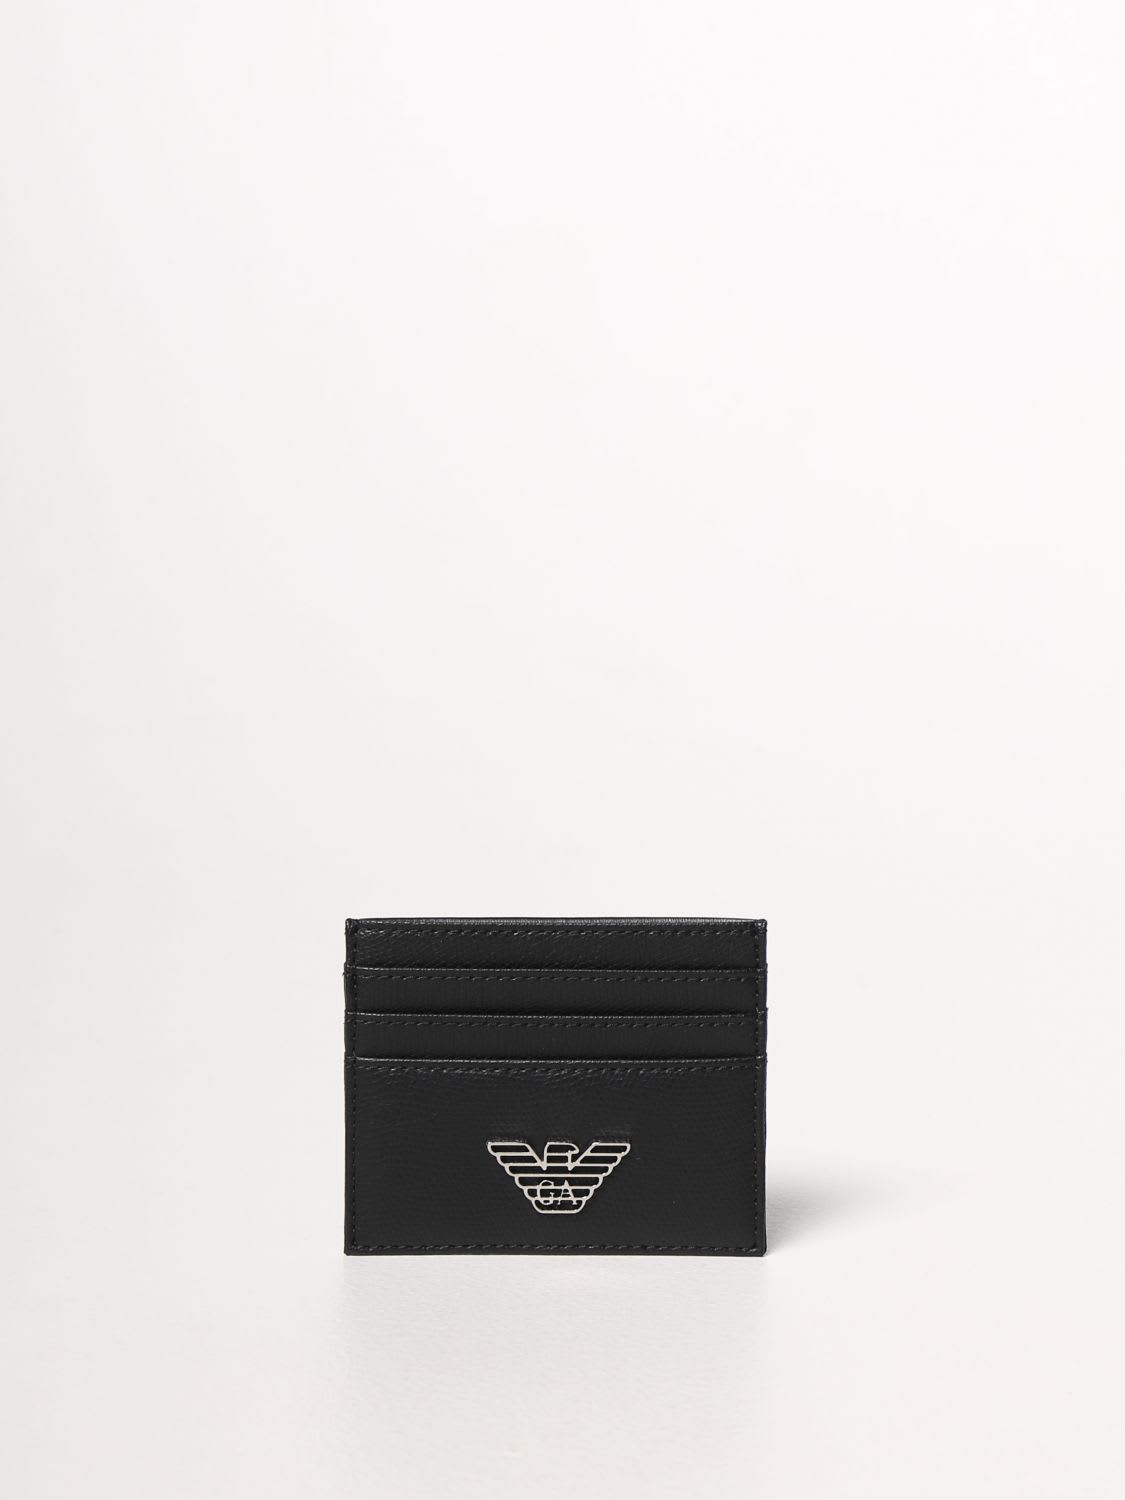 Emporio Armani Wallet Emporio Armani Card Holder In Synthetic Leather